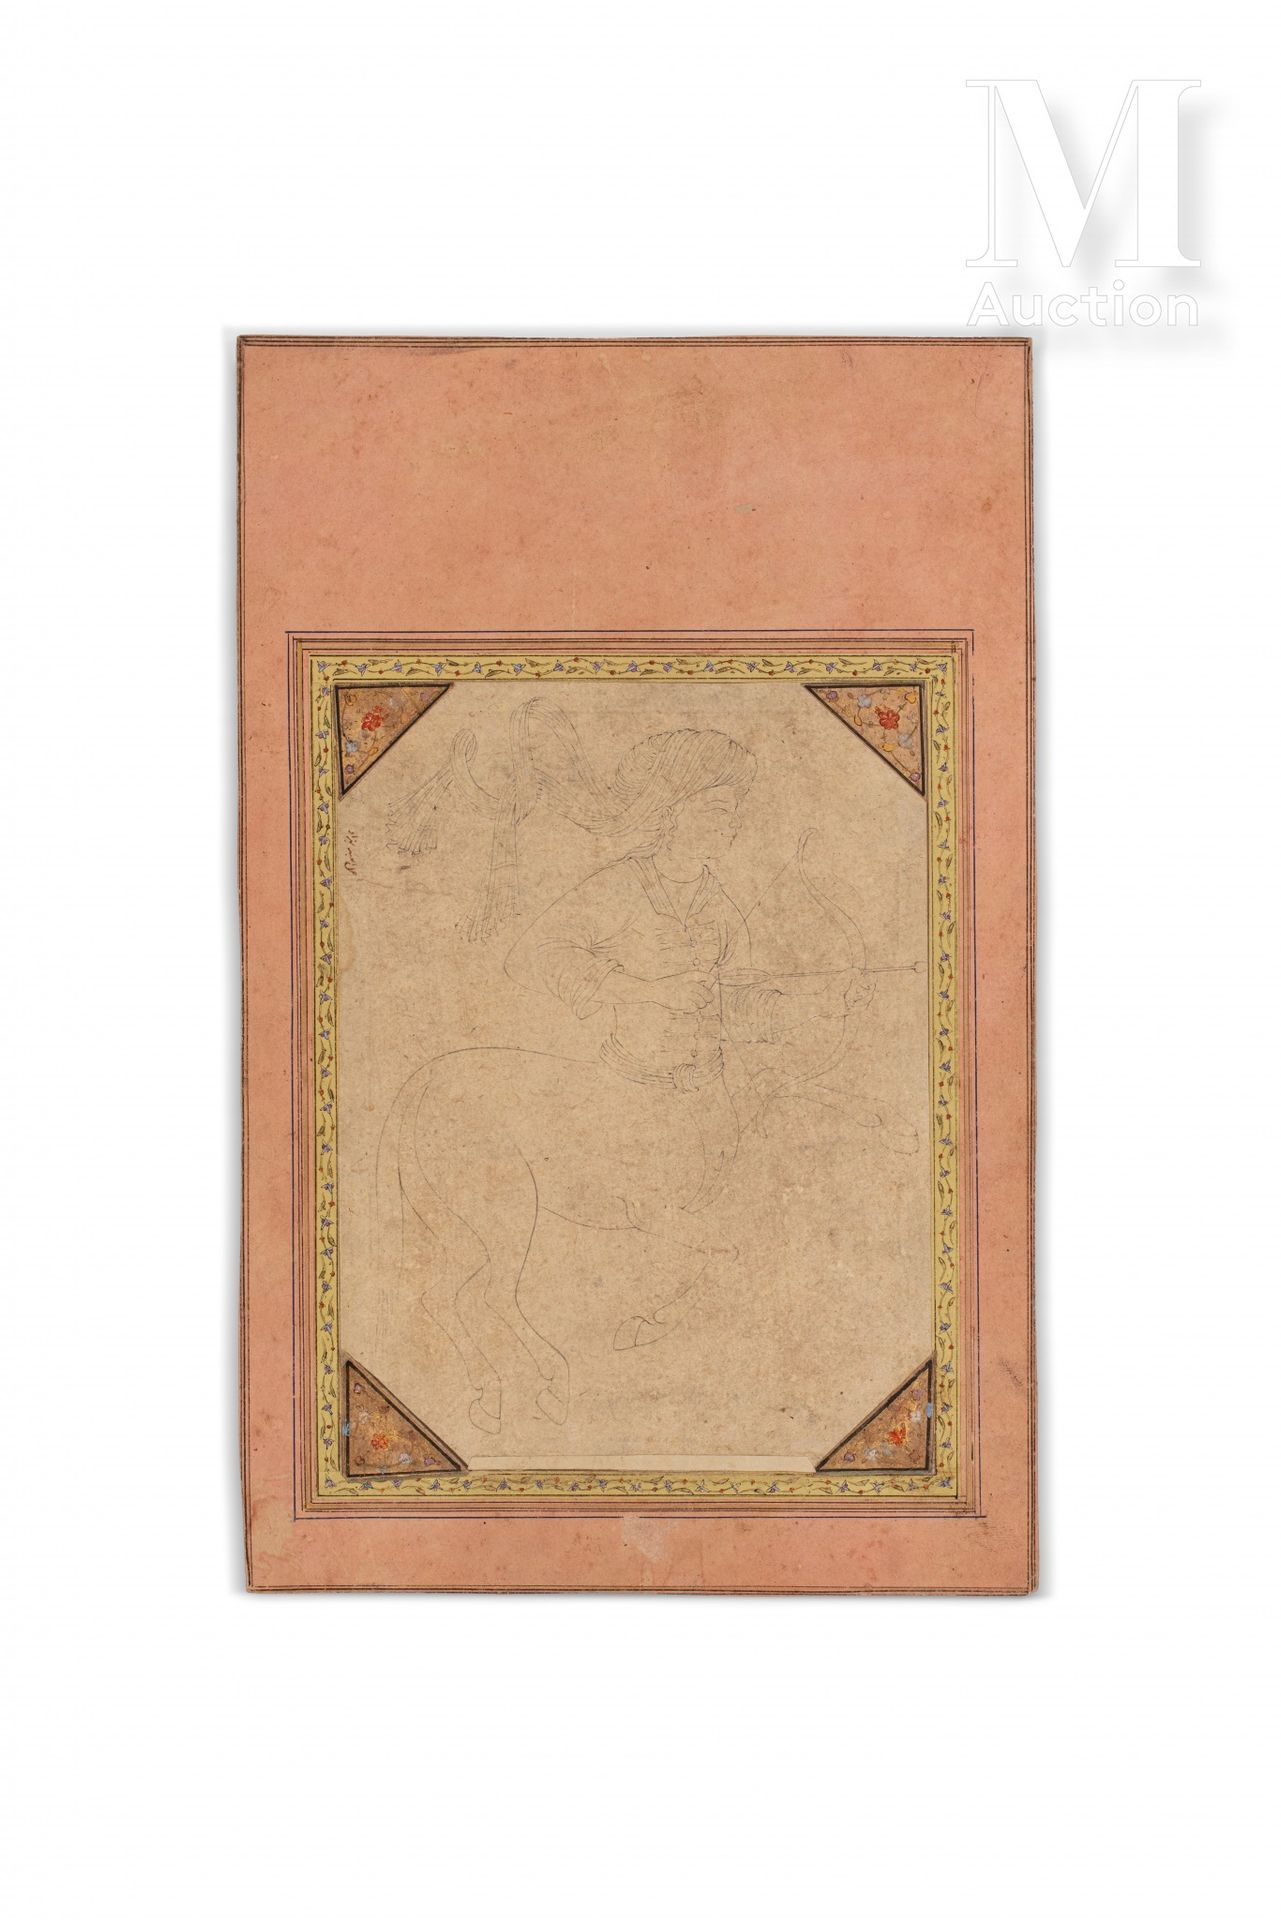 Archer centaure 伊朗，Behzad风格，19世纪

纸上水墨，装在相册页面上，显示一个半人马正要射箭。它被黄色背景上的花卉楣板所框住。四个镀金背&hellip;